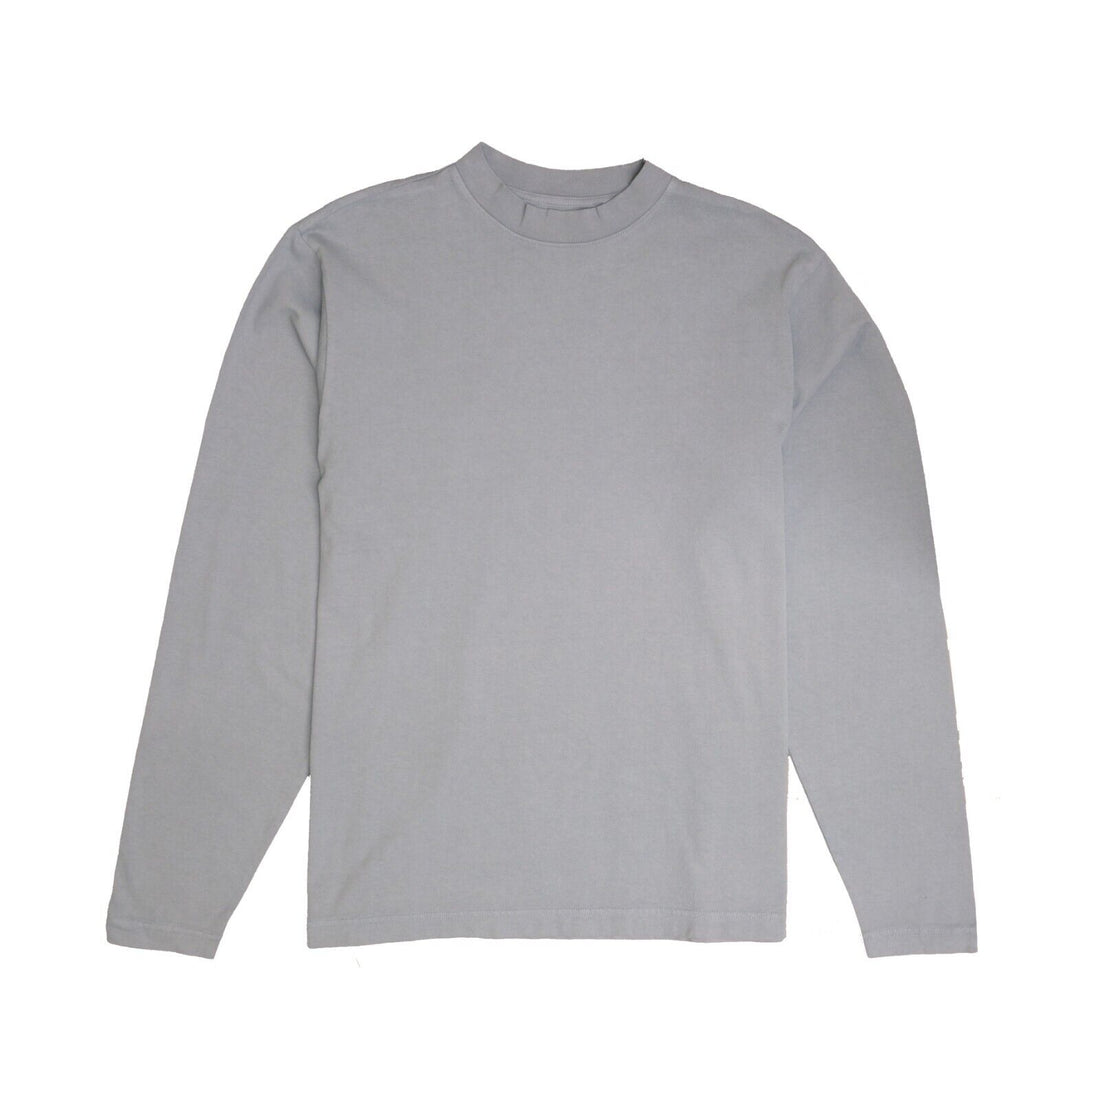 Yeezy Gap Unreleased Long Sleeve T-Shirt Size Medium Gray